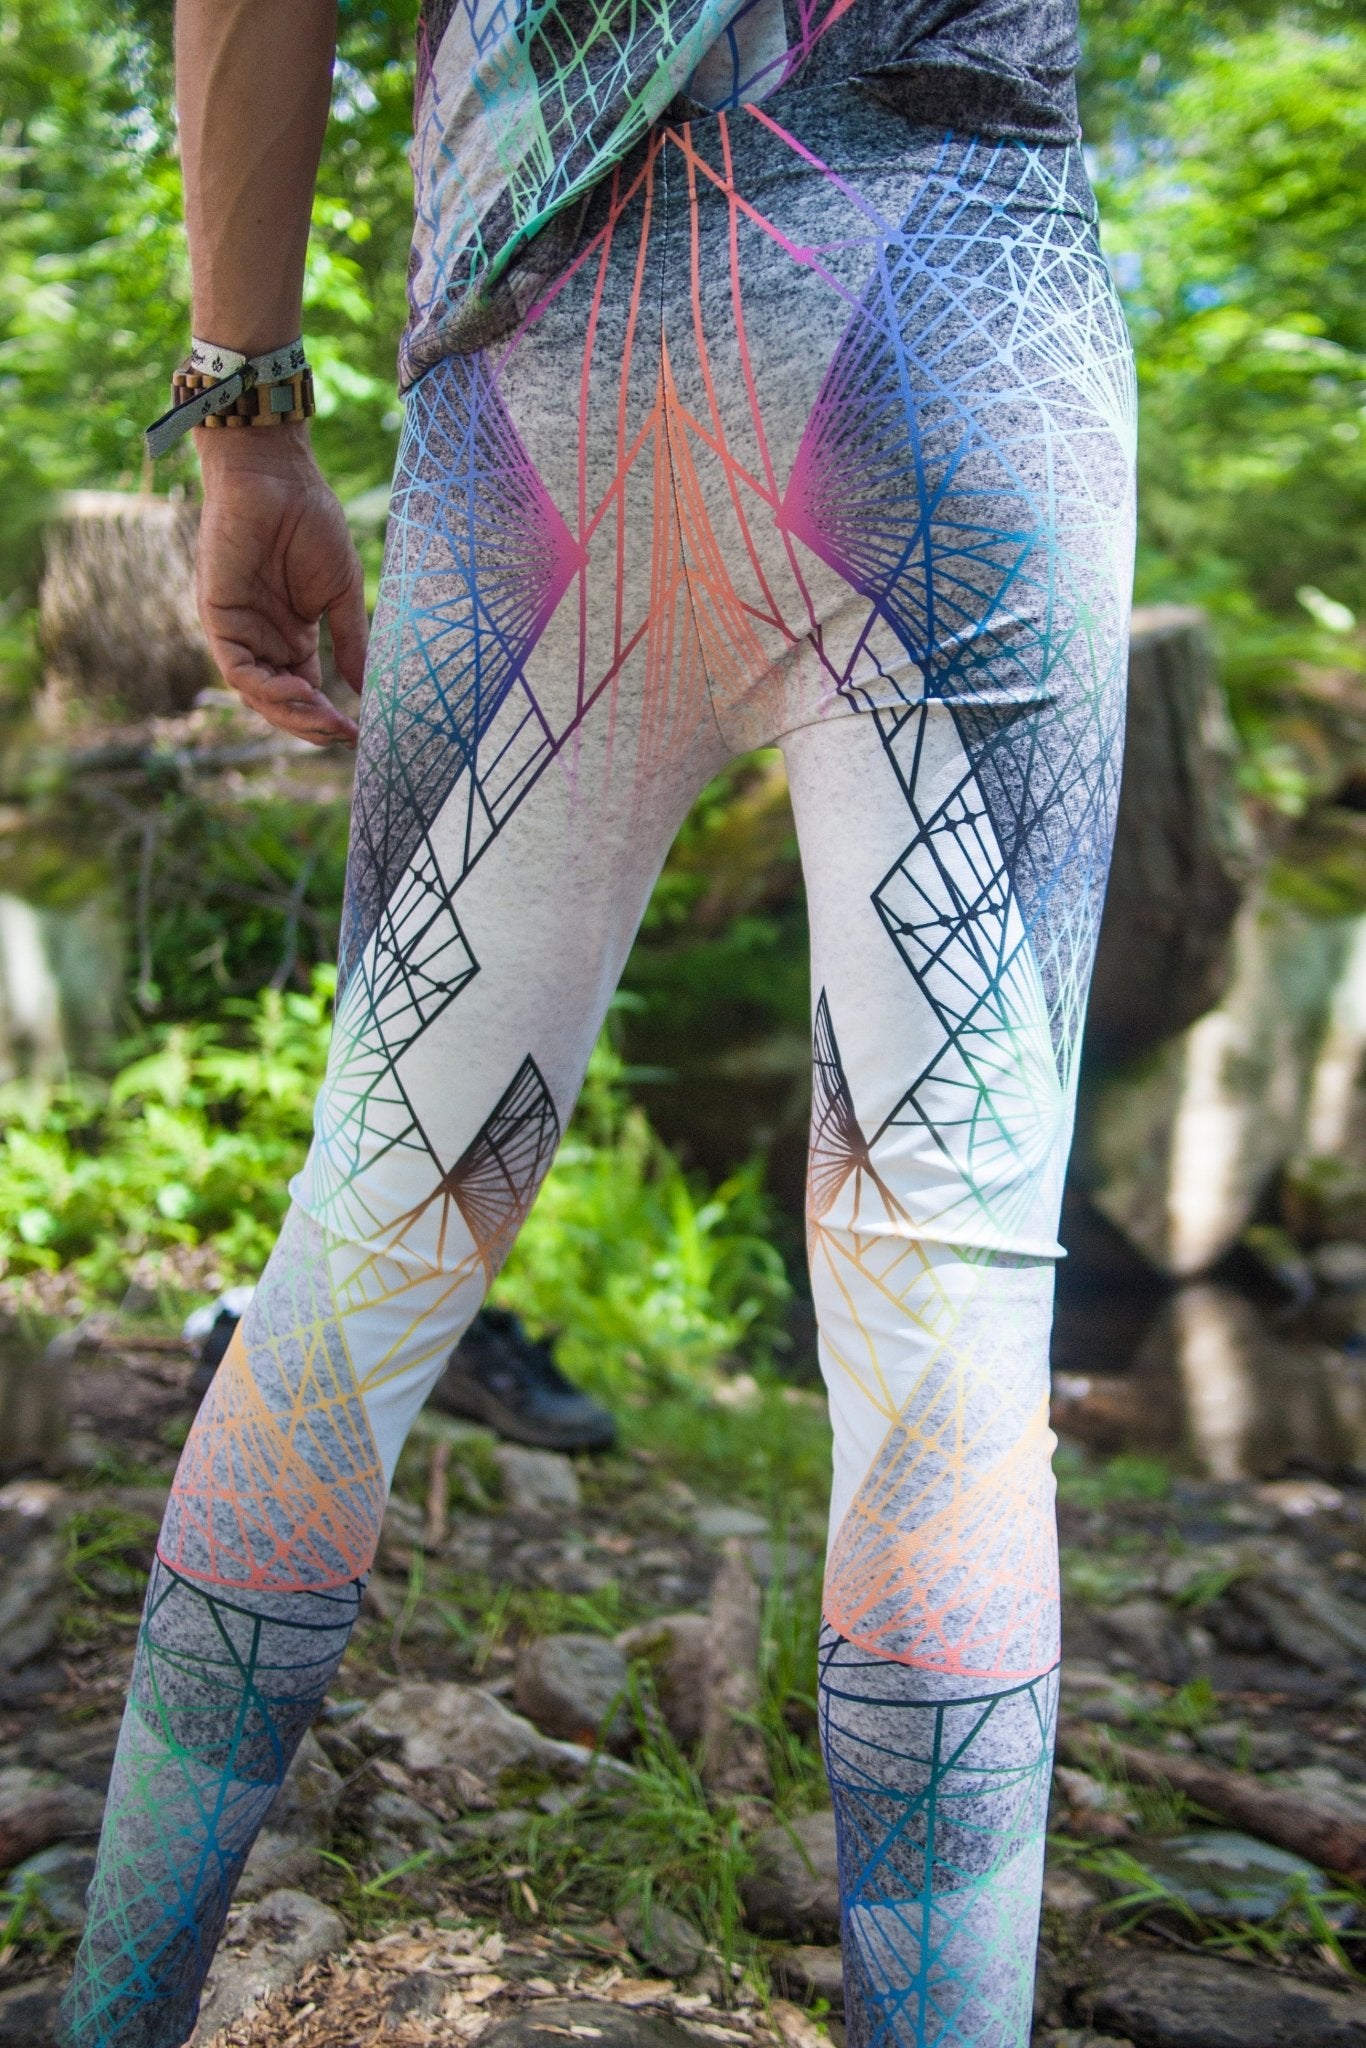 Techno Unicorn Leggings by Jodi Sharp - anahata designs/infiniti now